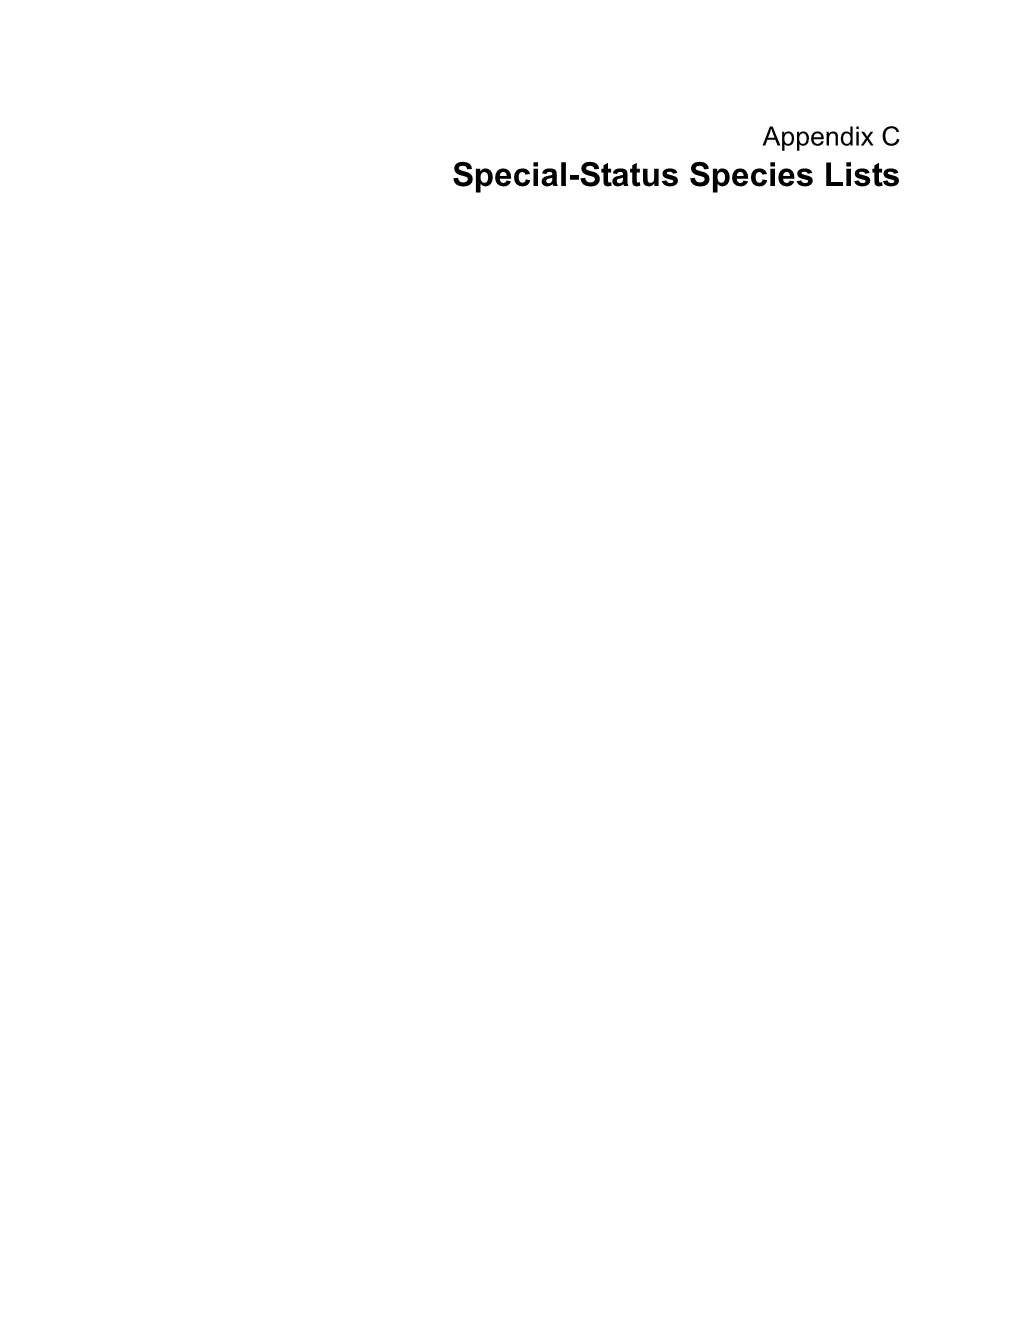 Appendix C. Special-Status Species Lists